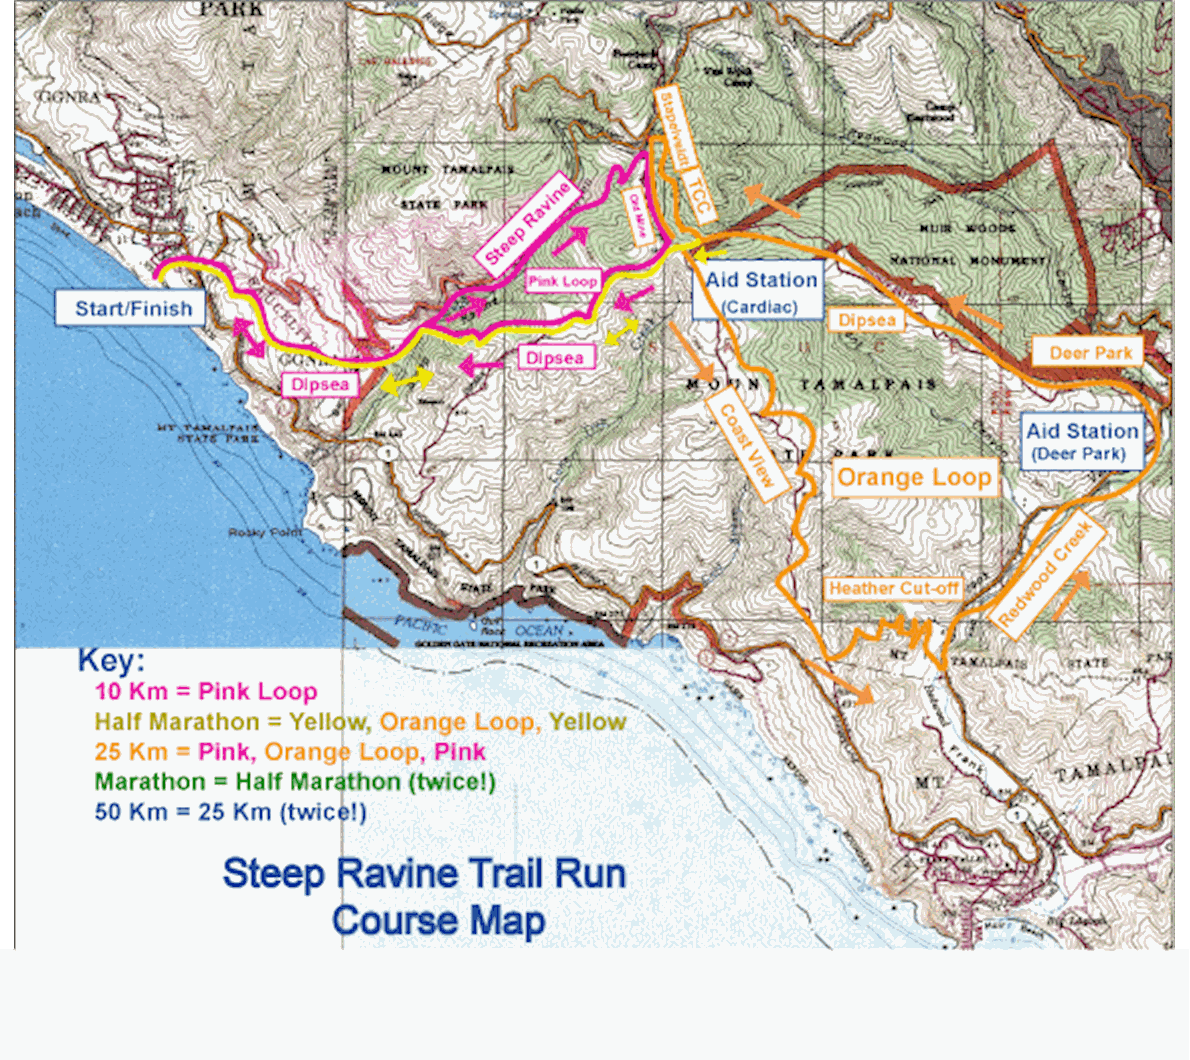 Steep Ravine Trail Run Routenkarte